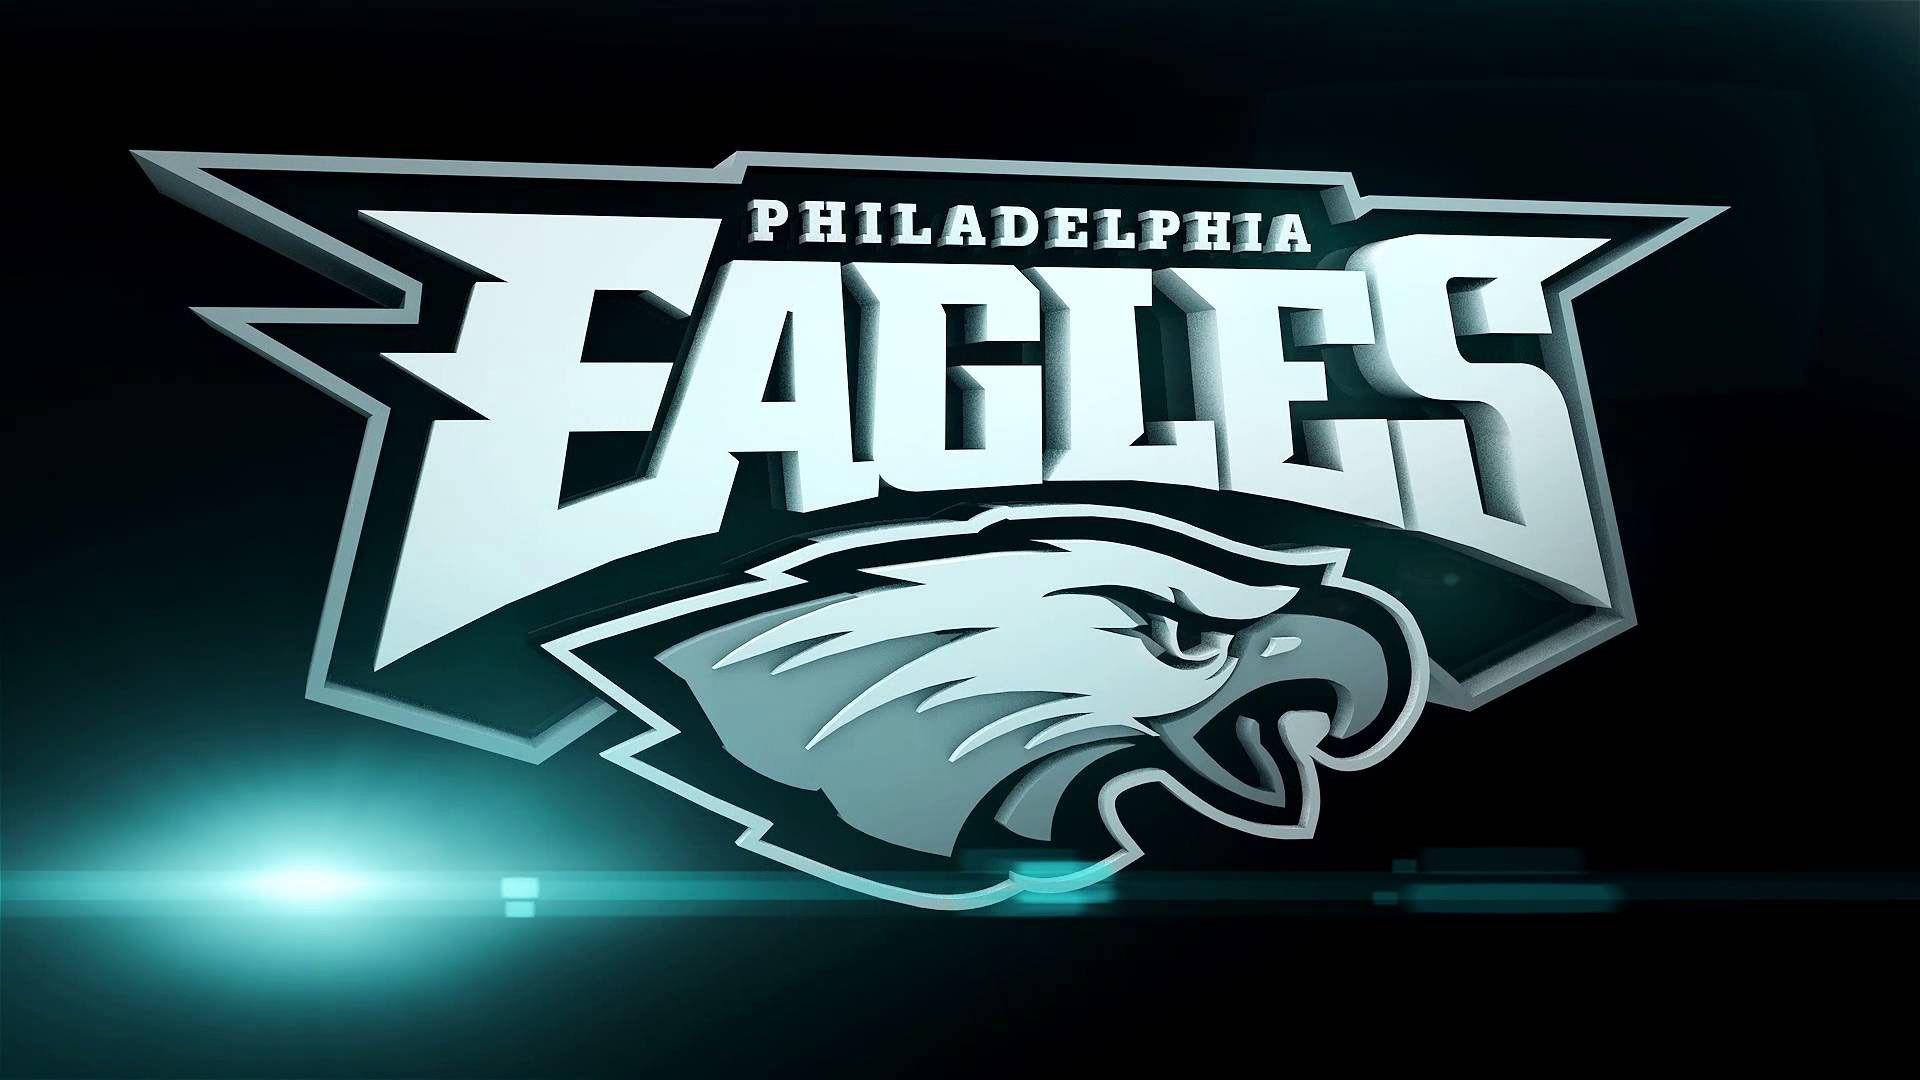 Philadelphia Eagles Wallpaper HD Image Konpax 2017